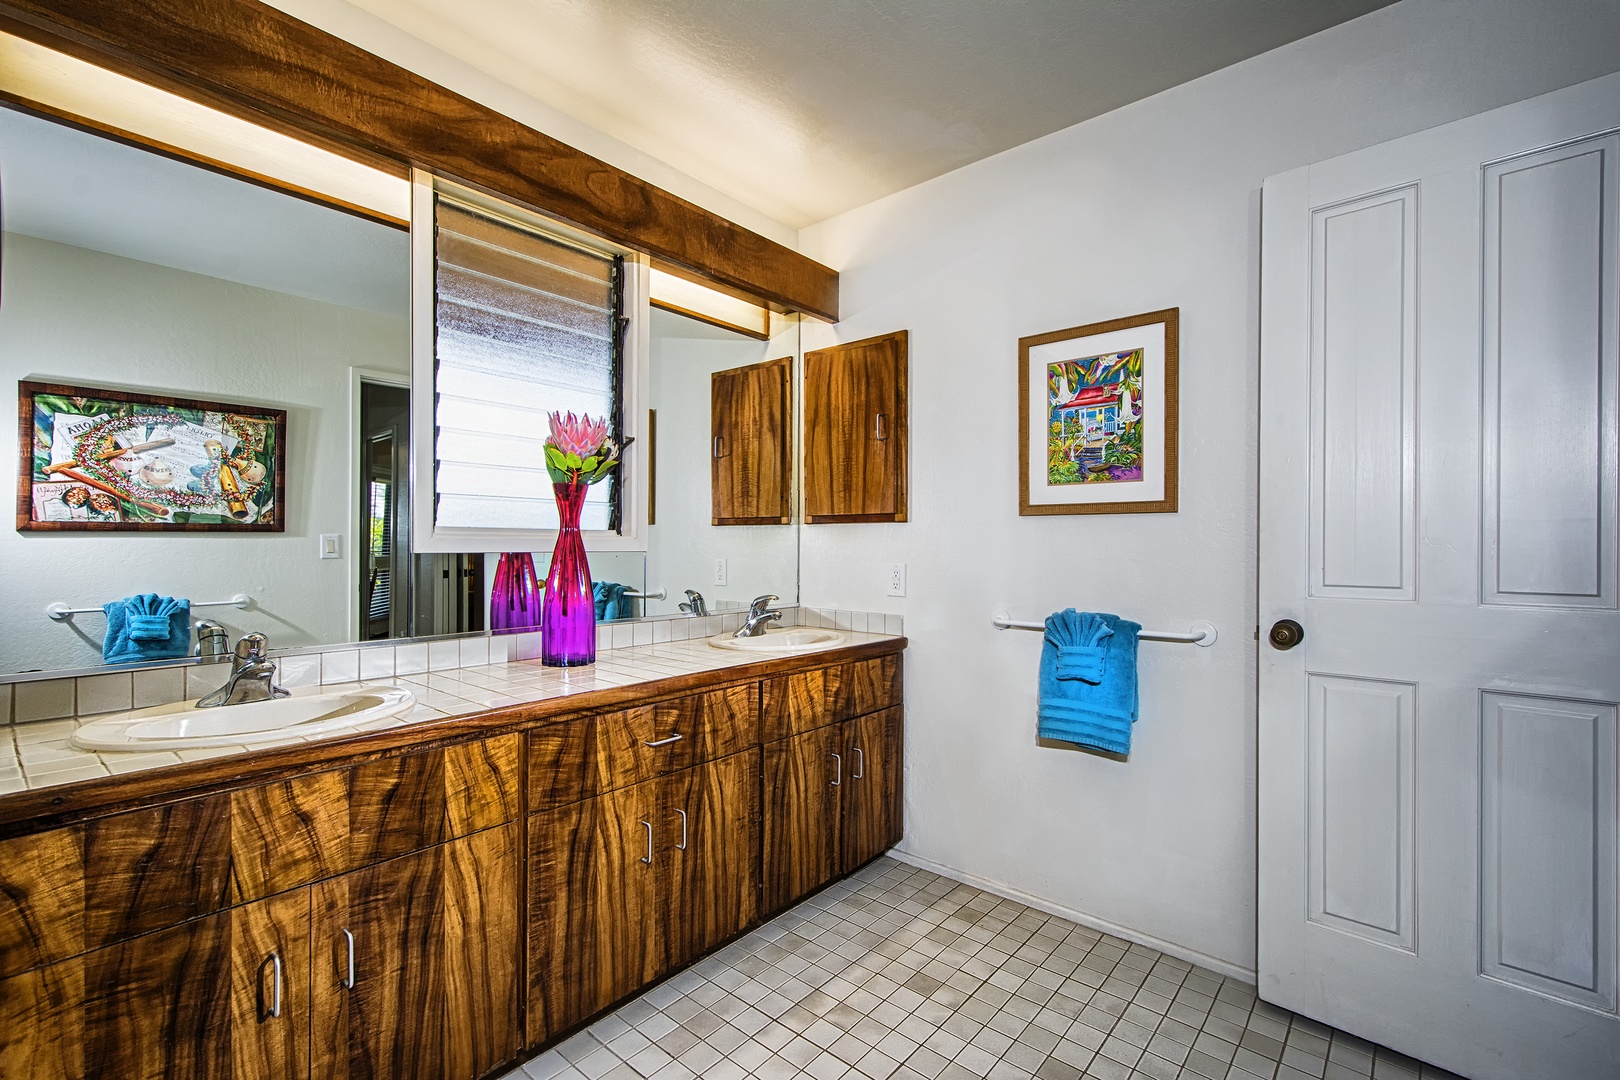 Kailua Kona Vacation Rentals, Kanaloa 701 - Primary bathroom with dual vanities!